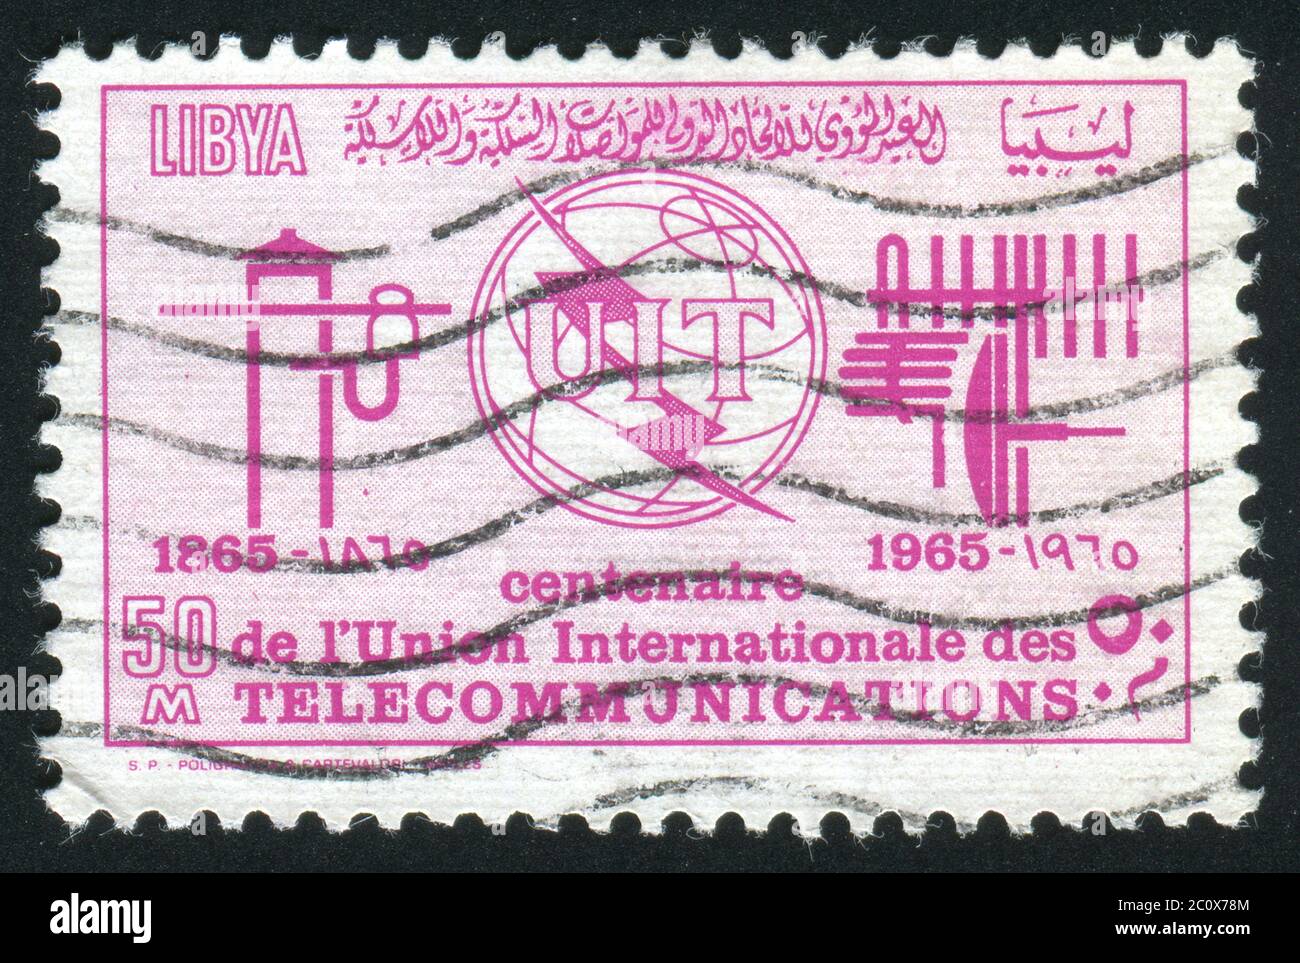 LIBYA - CIRCA 1970: Emblem of the international telecommunication company, circa 1970. Stock Photo